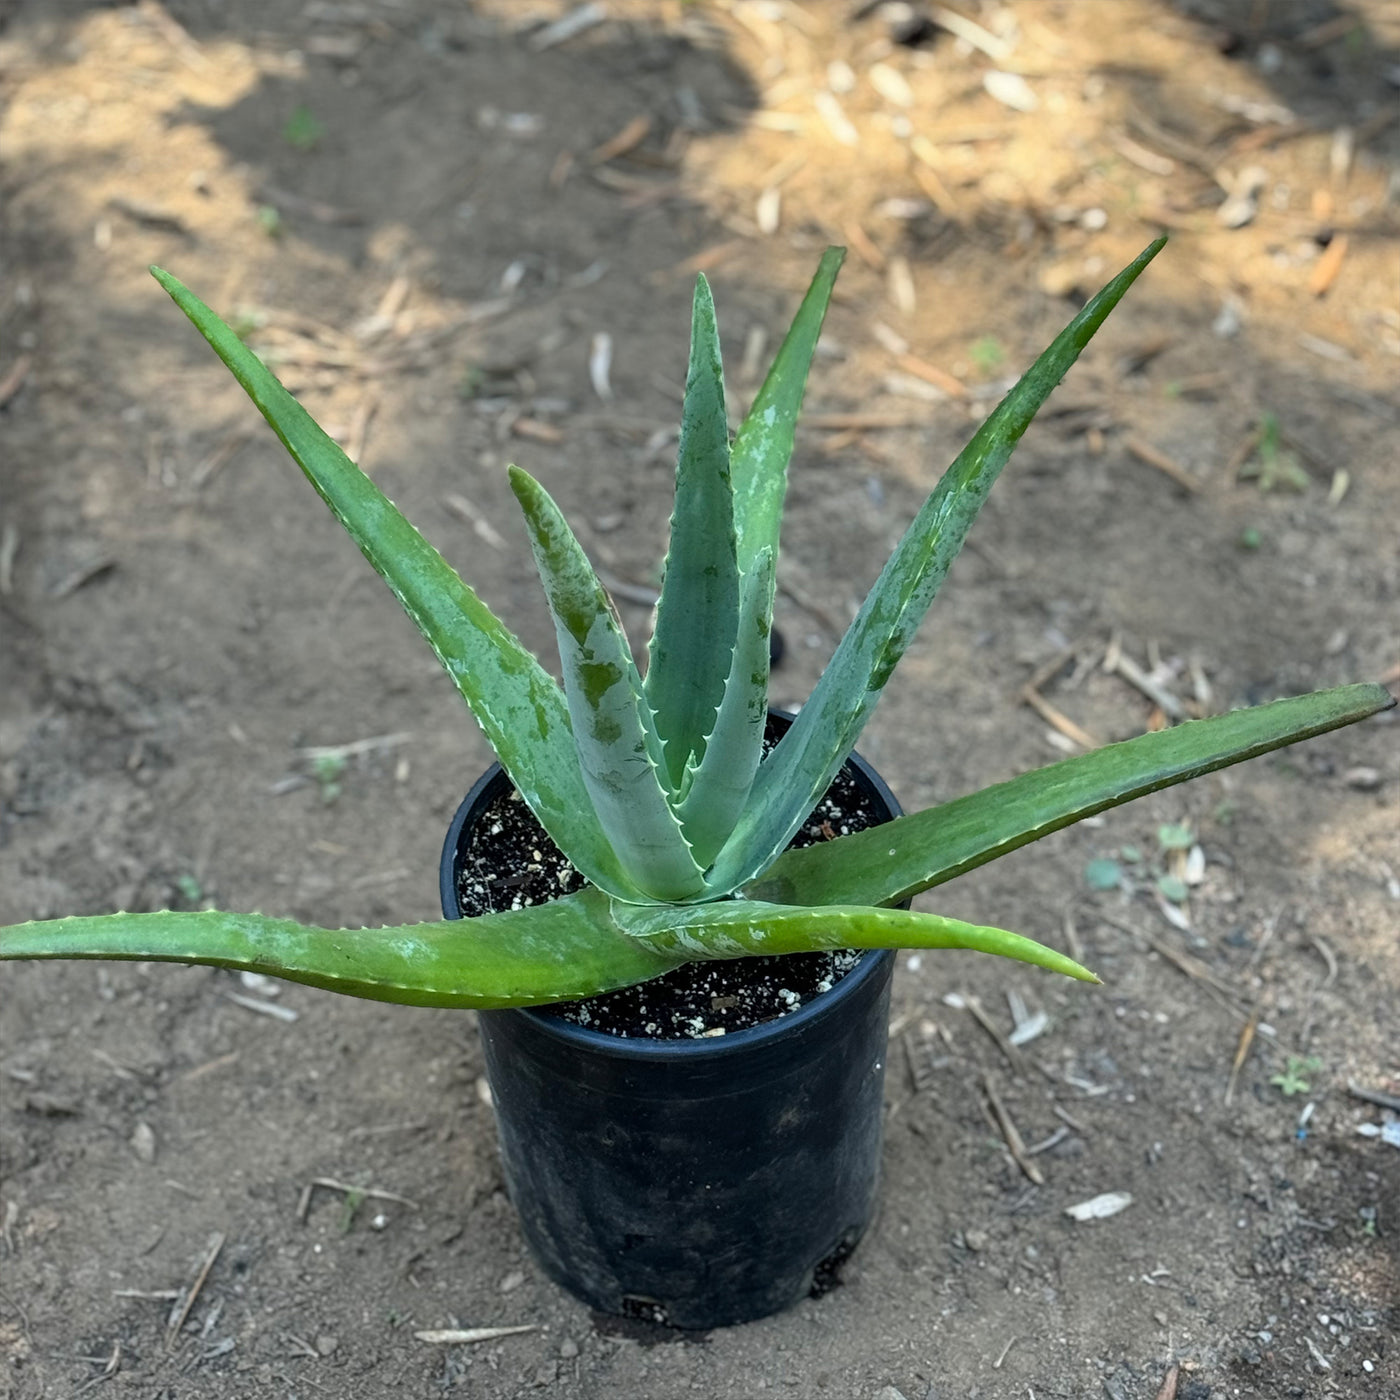 Aloe Vera - Aloe barbadensis 'miller